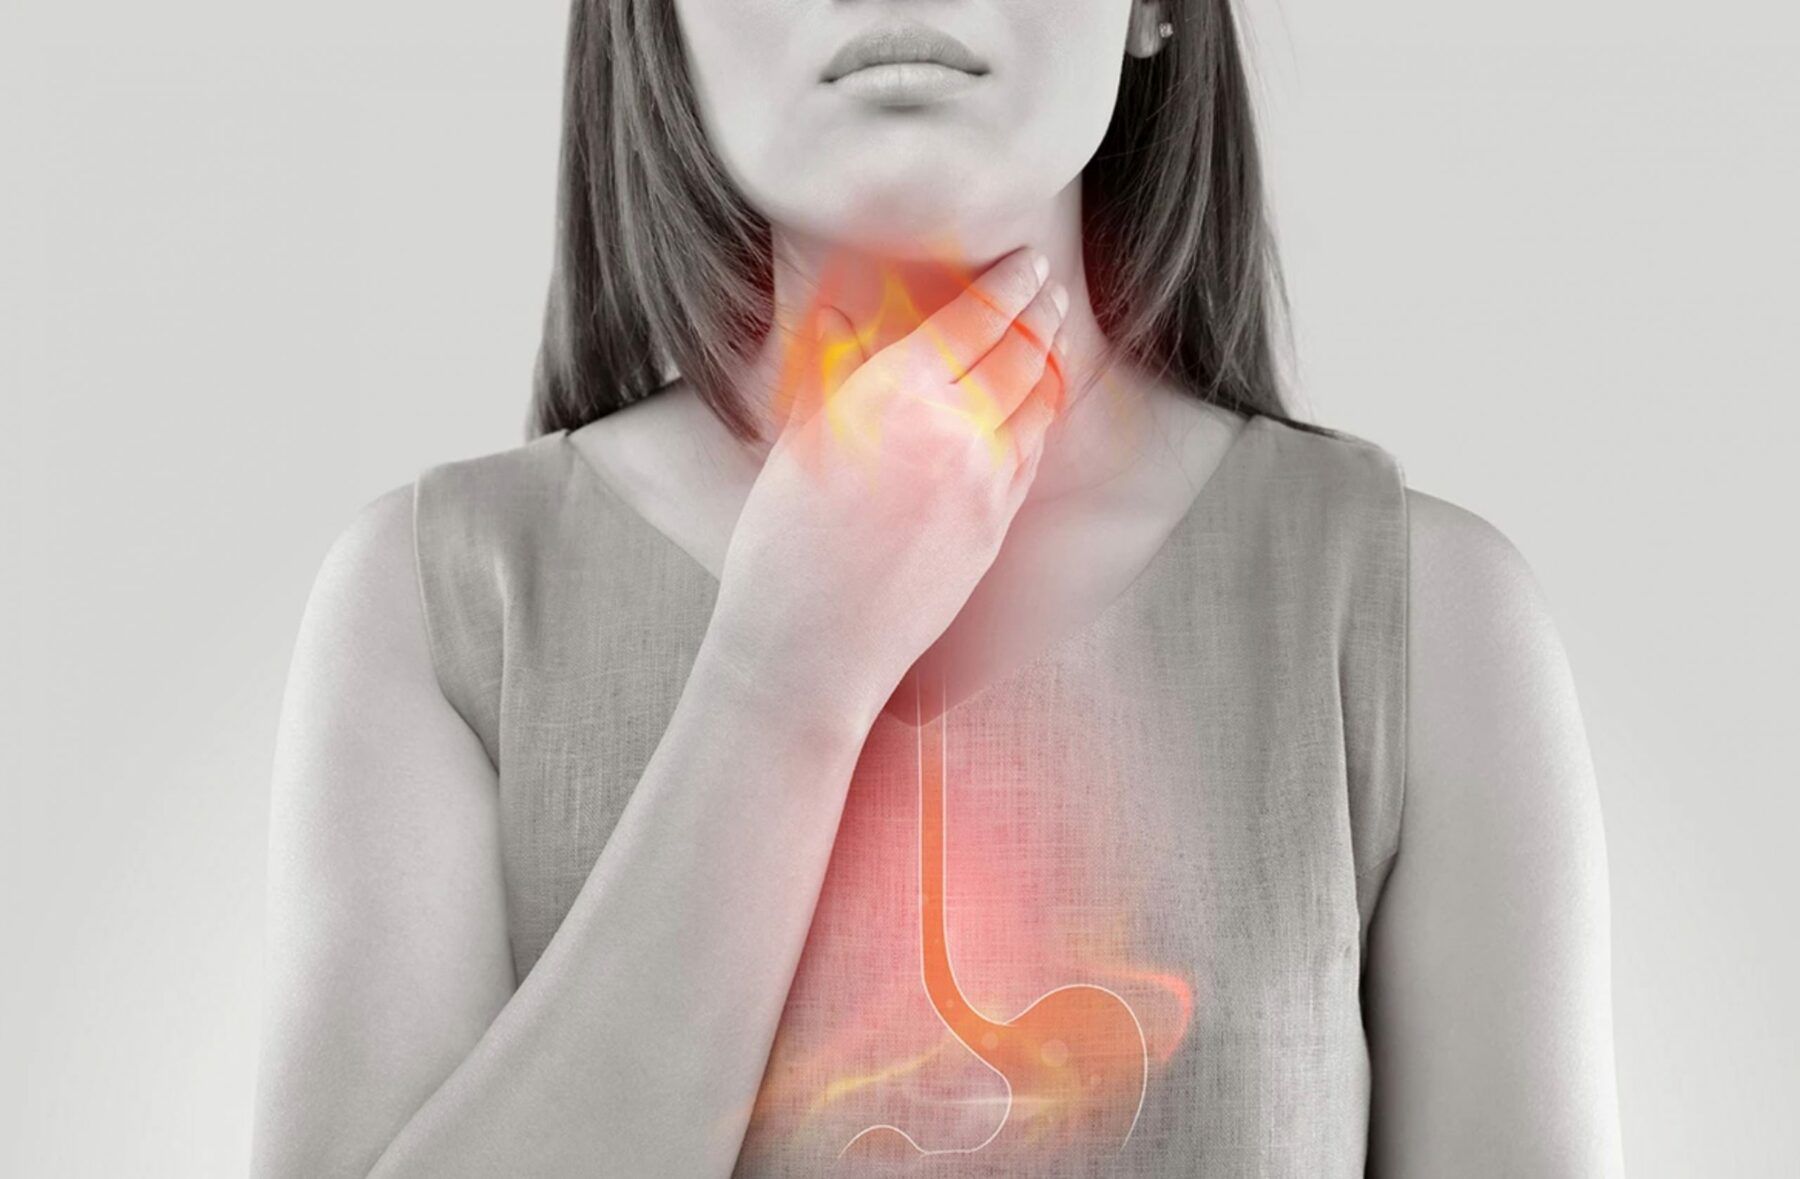 Simptome reflux gastroesofagian